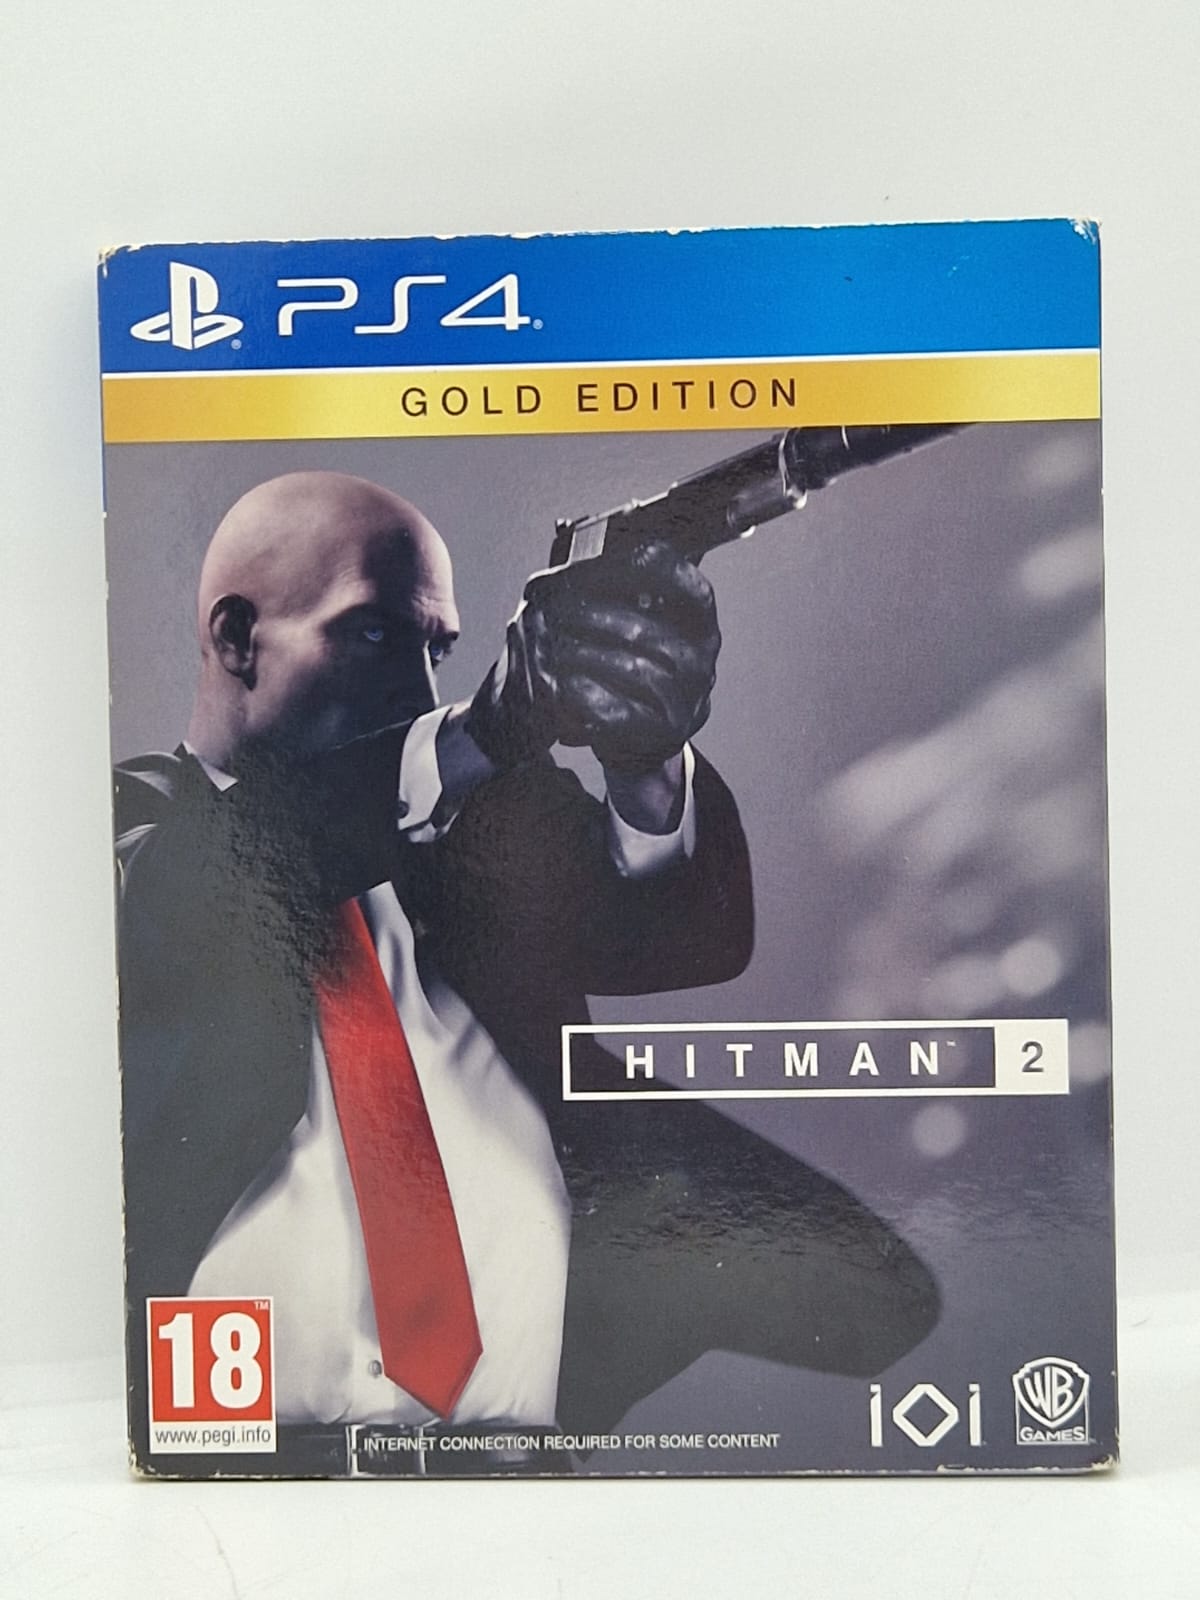 Hitman 2 - Gold Edition Steelbook Version | PlayStation 4 PS4 | USED - NO DLC